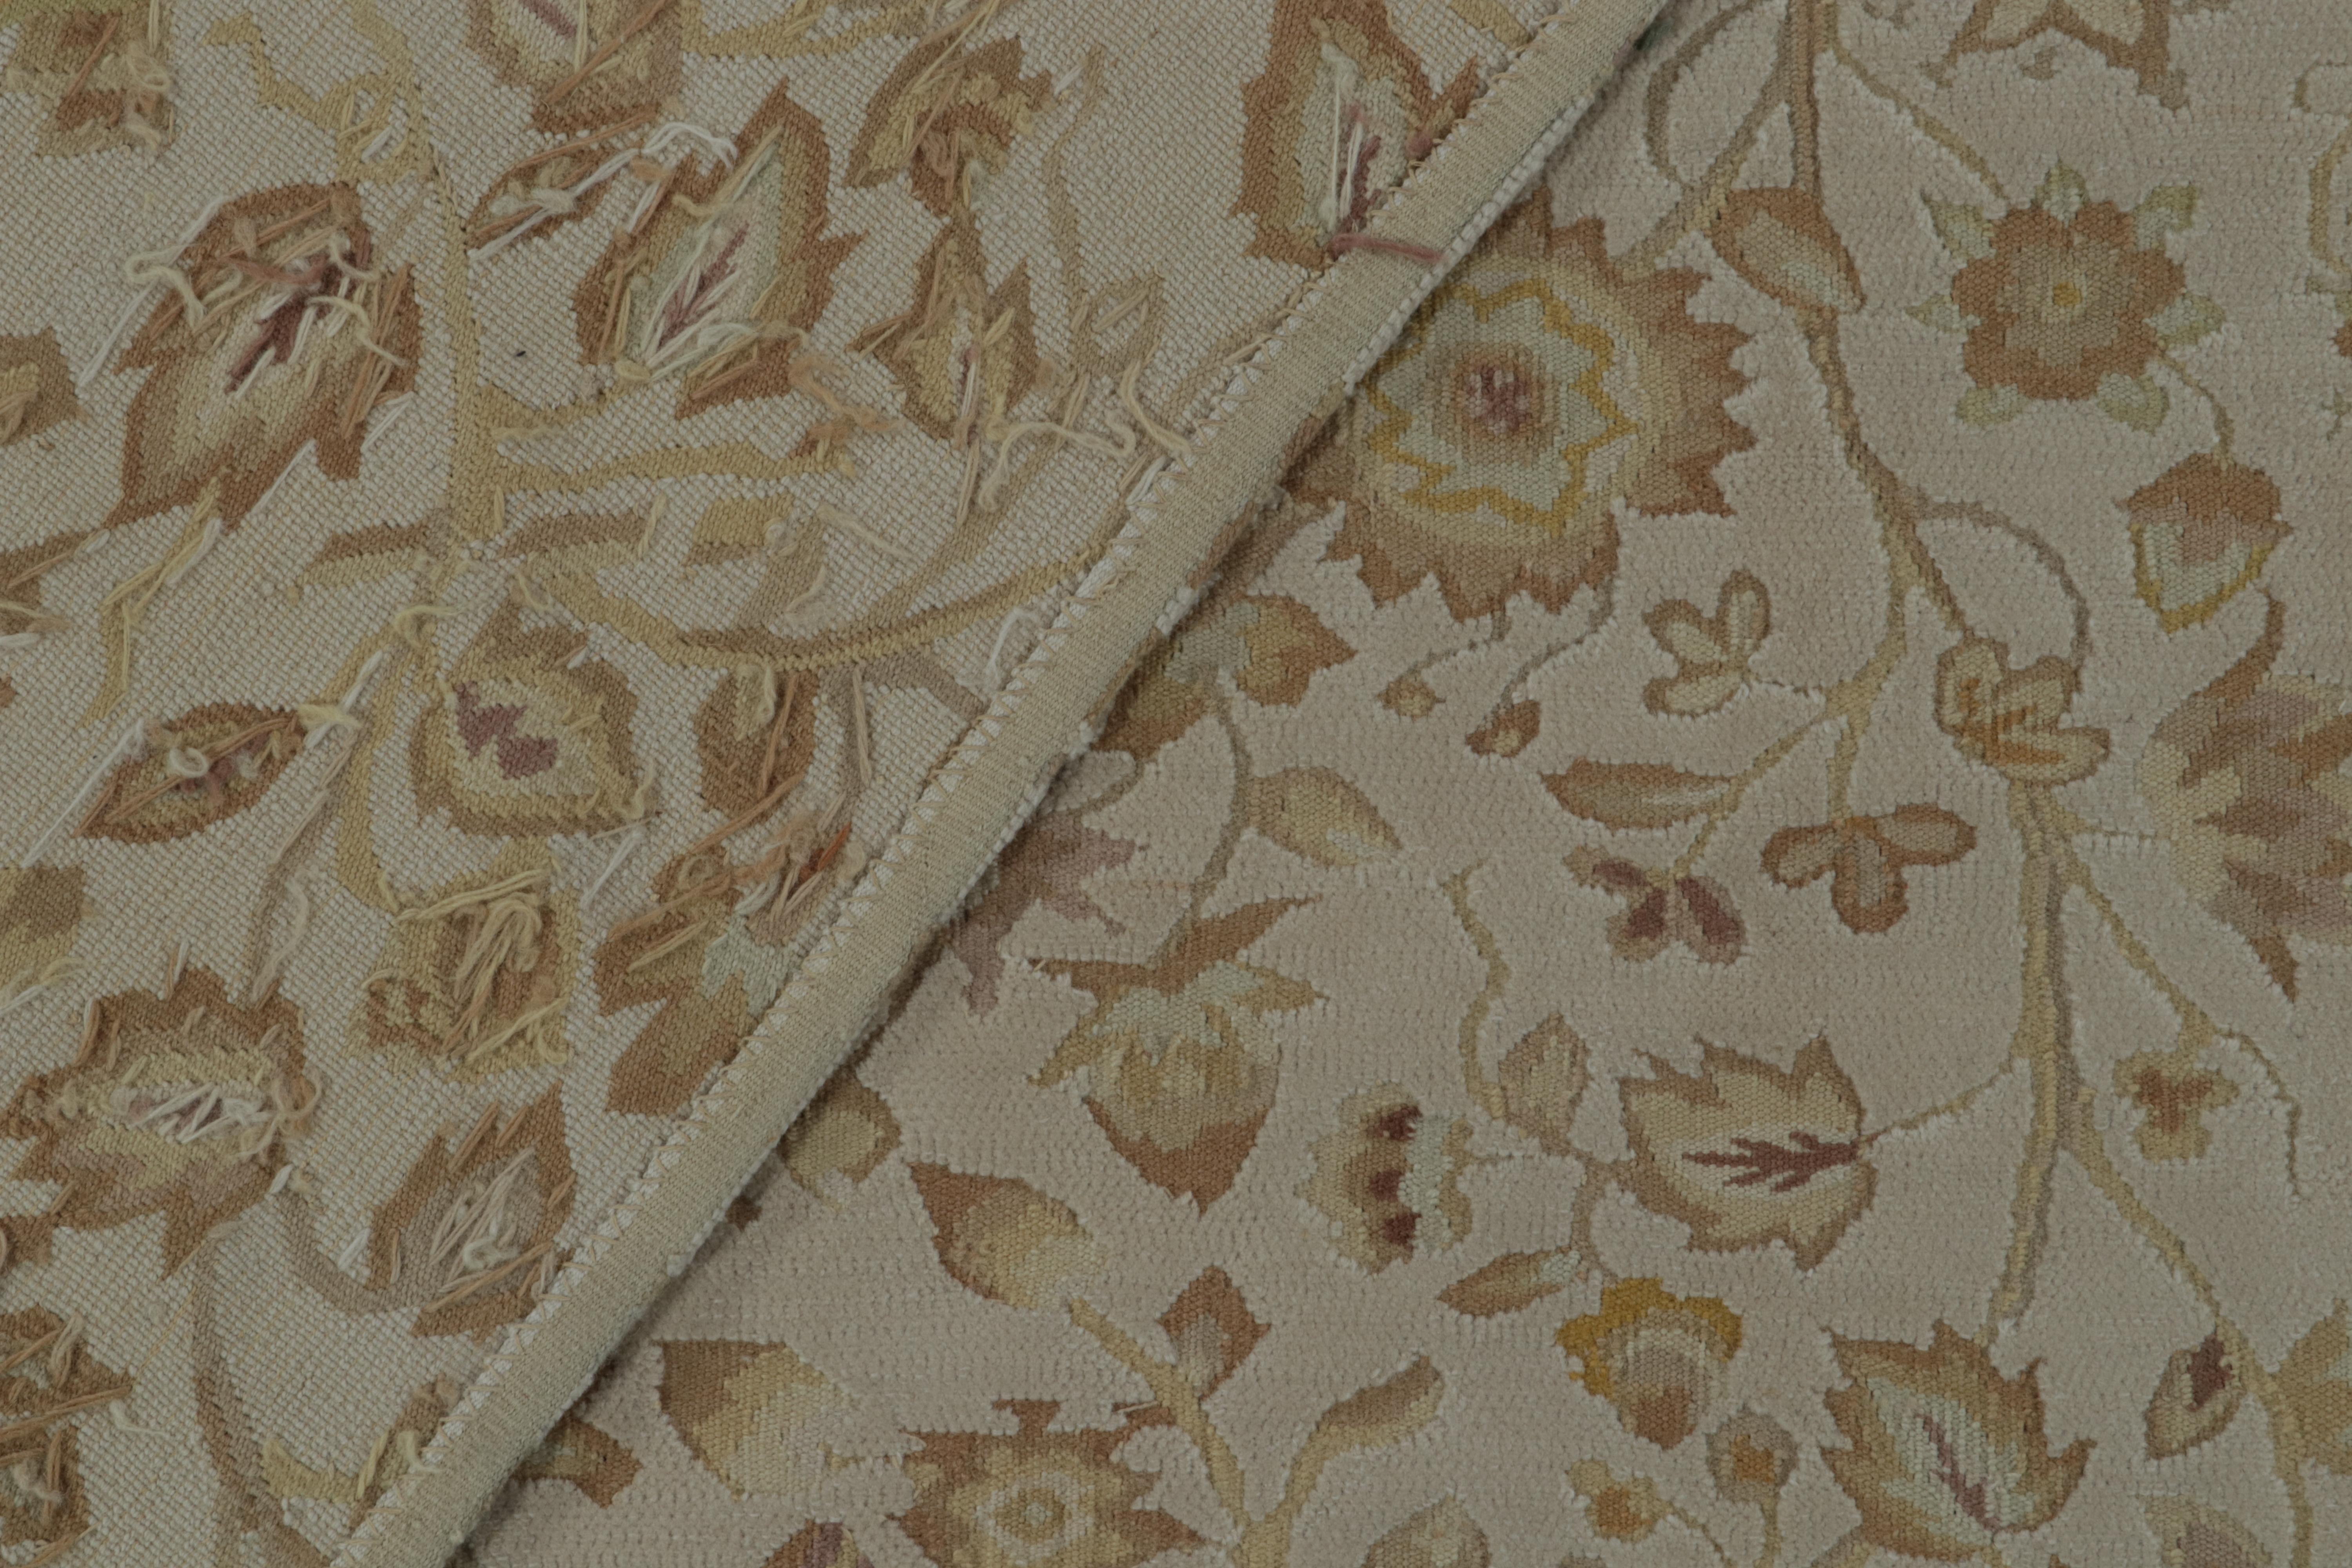 Laine Tapis & Kilim's European Tudor style Flat Weave in Gray with Gold Floral Pattern (en anglais) en vente